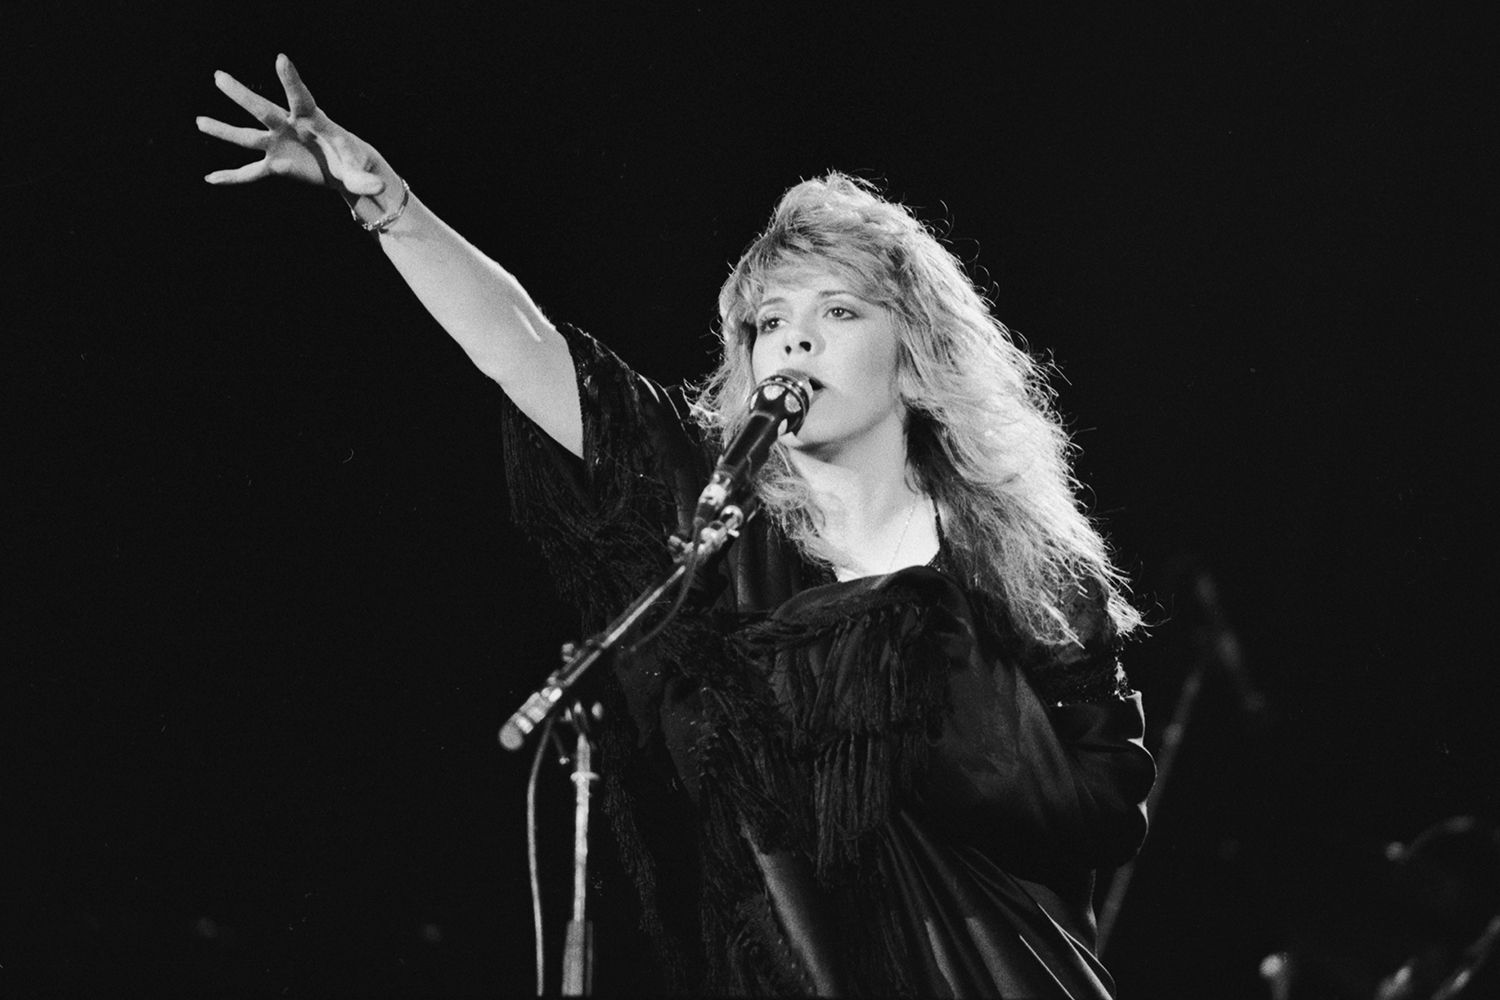 Singer Stevie Nicks performs at the 1983 US Festival.